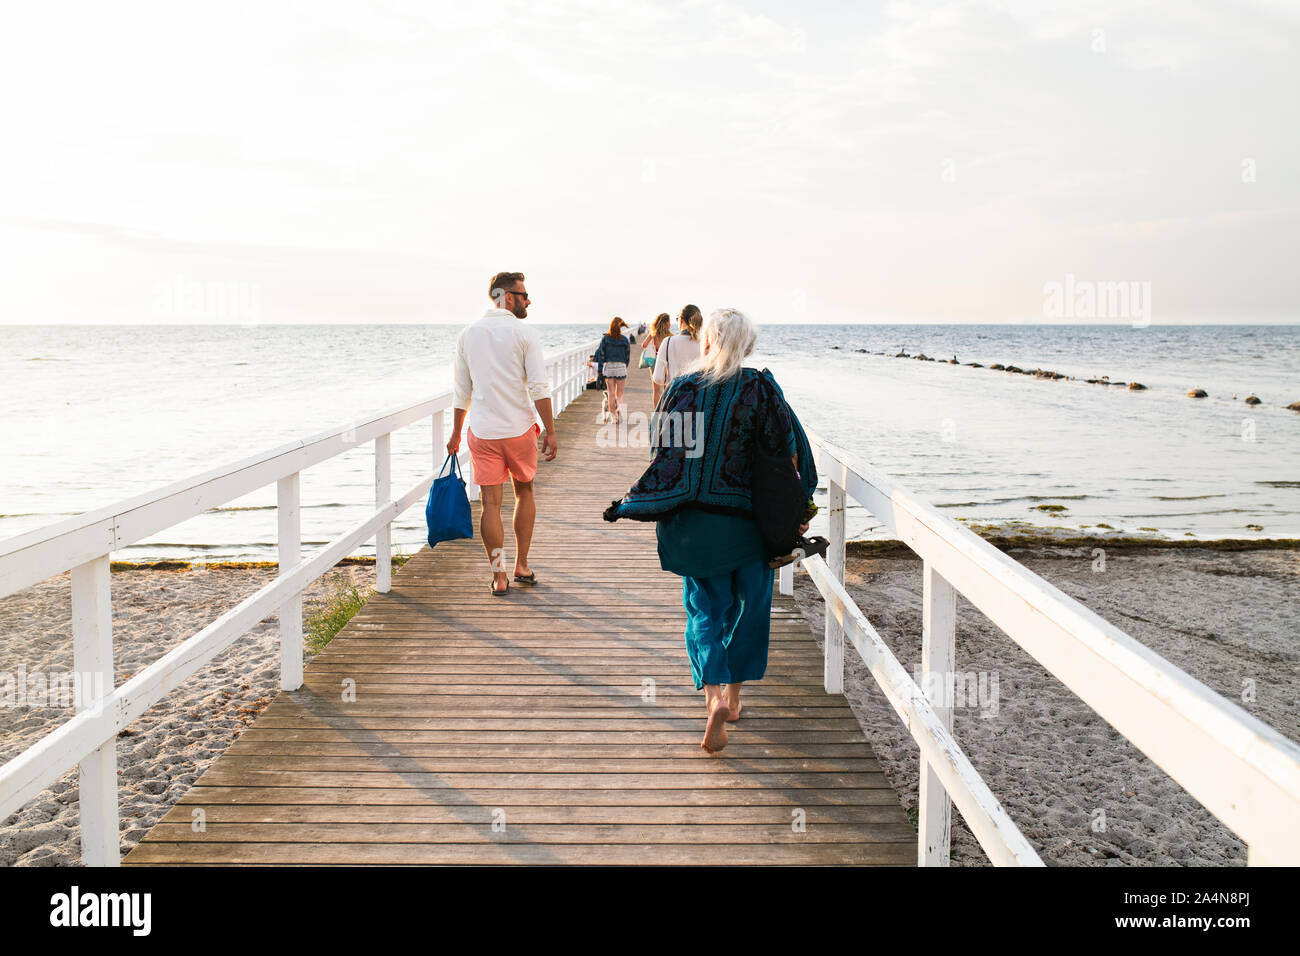 People walking on pier at seaside Stock Photo